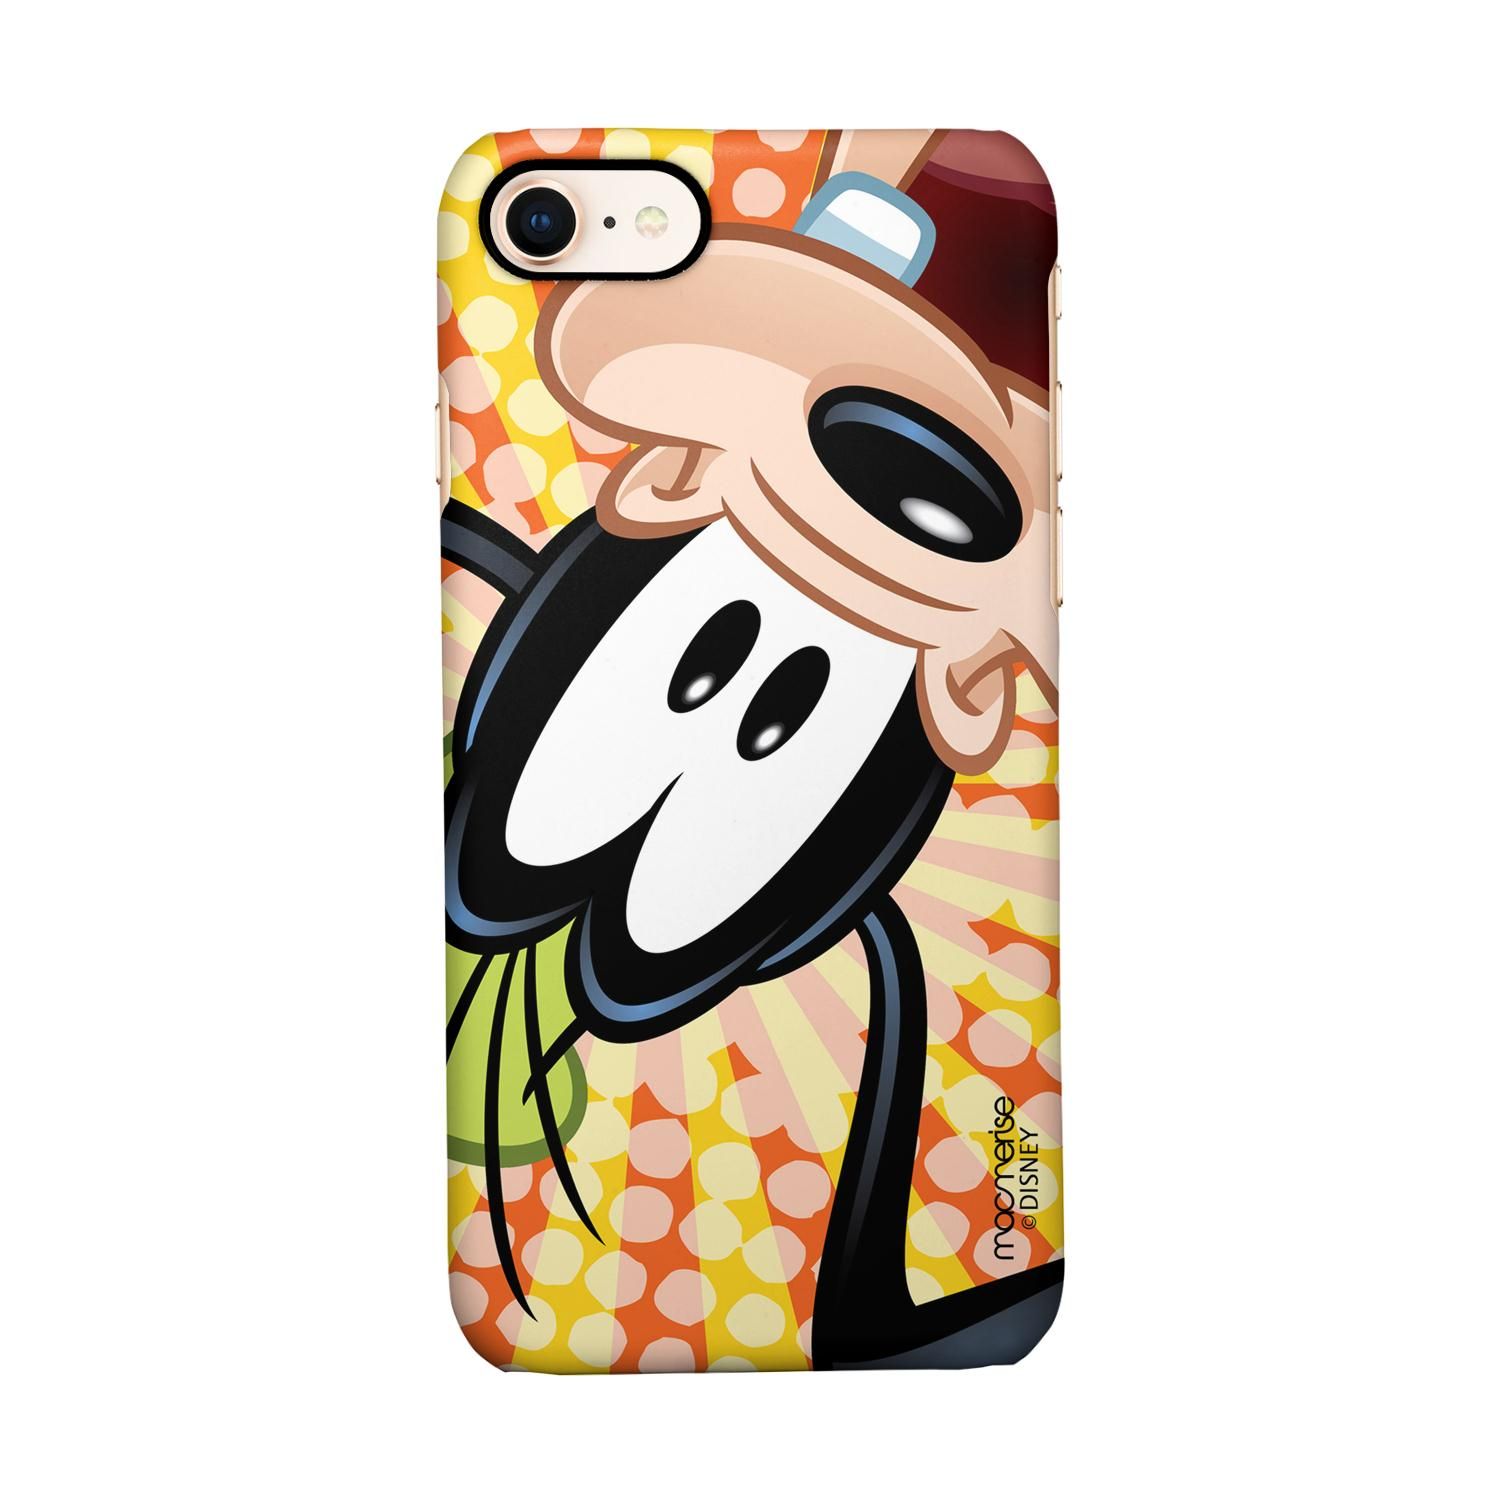 Buy Goofy Upside Down - Sleek Phone Case for iPhone 8 Online